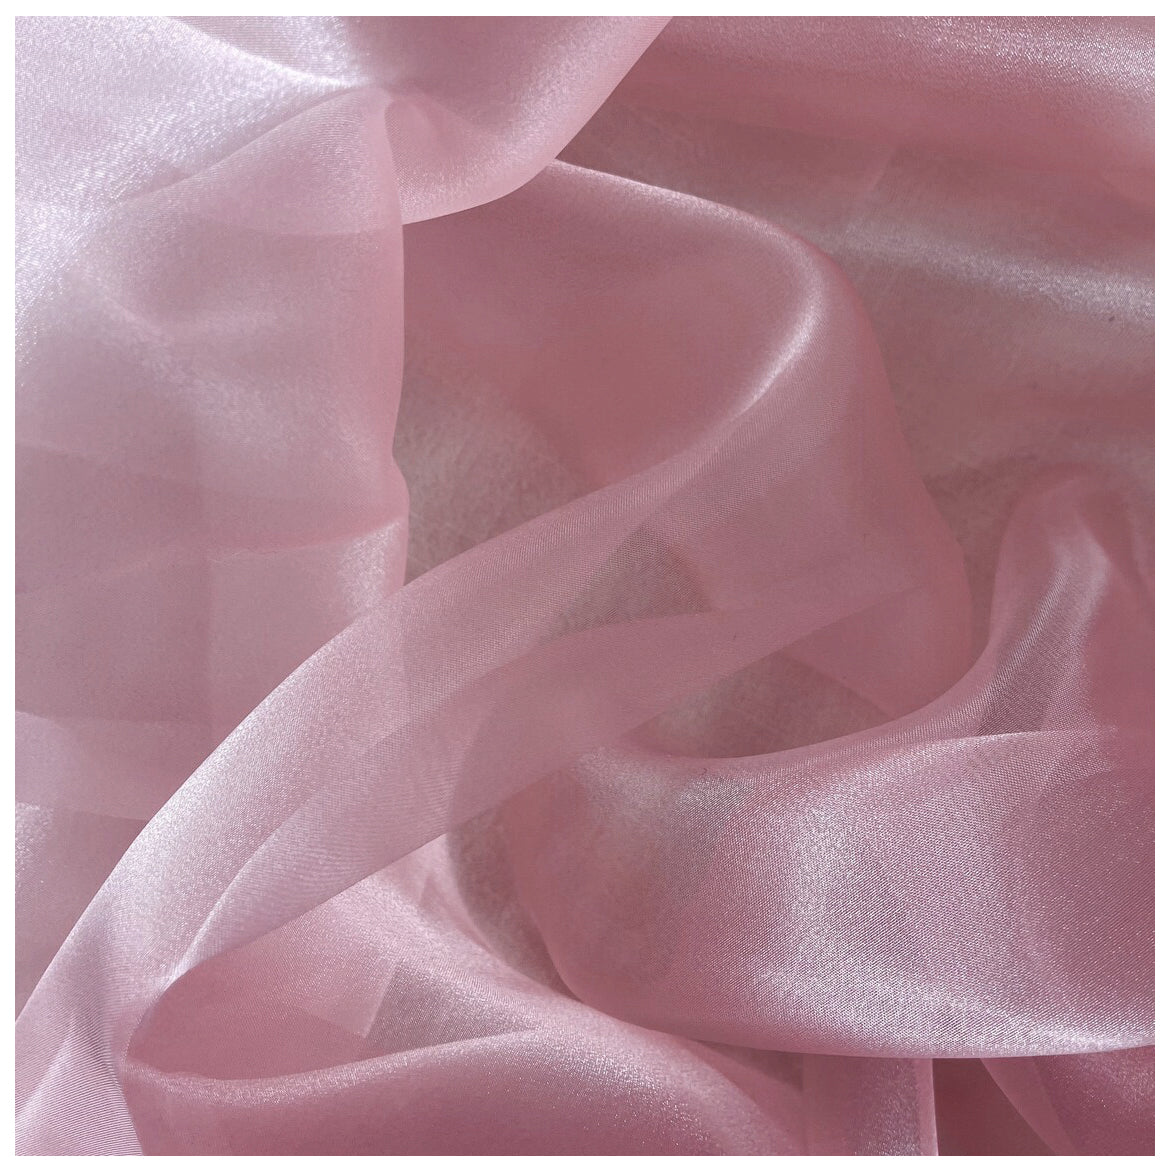 Blush Pink,cbc1dc6b-d150-4e63-8b19-df159744600f